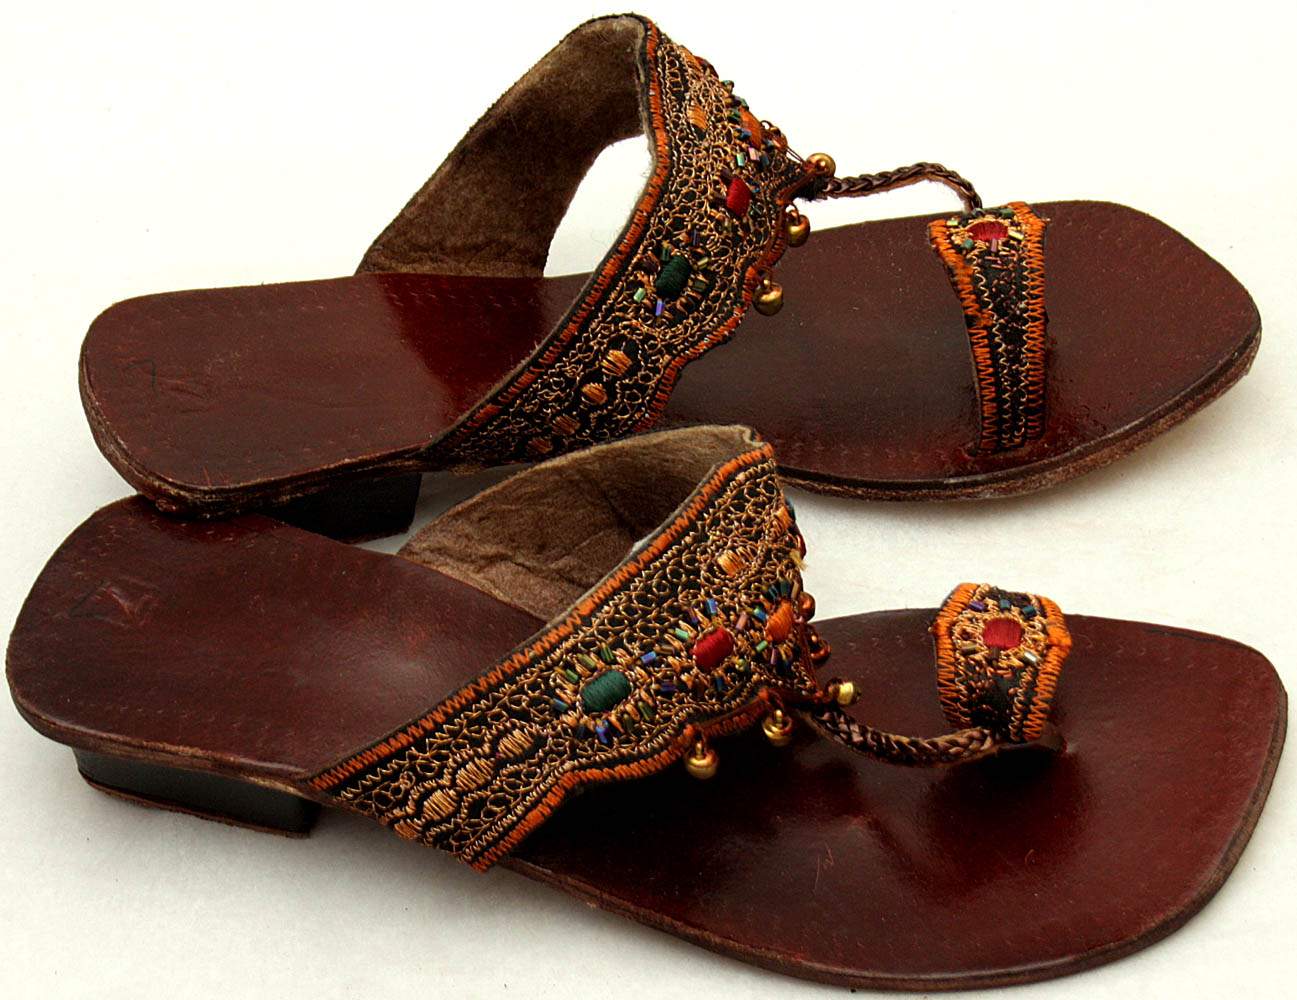 Why doesn't Krishna wear slippers? - Quora